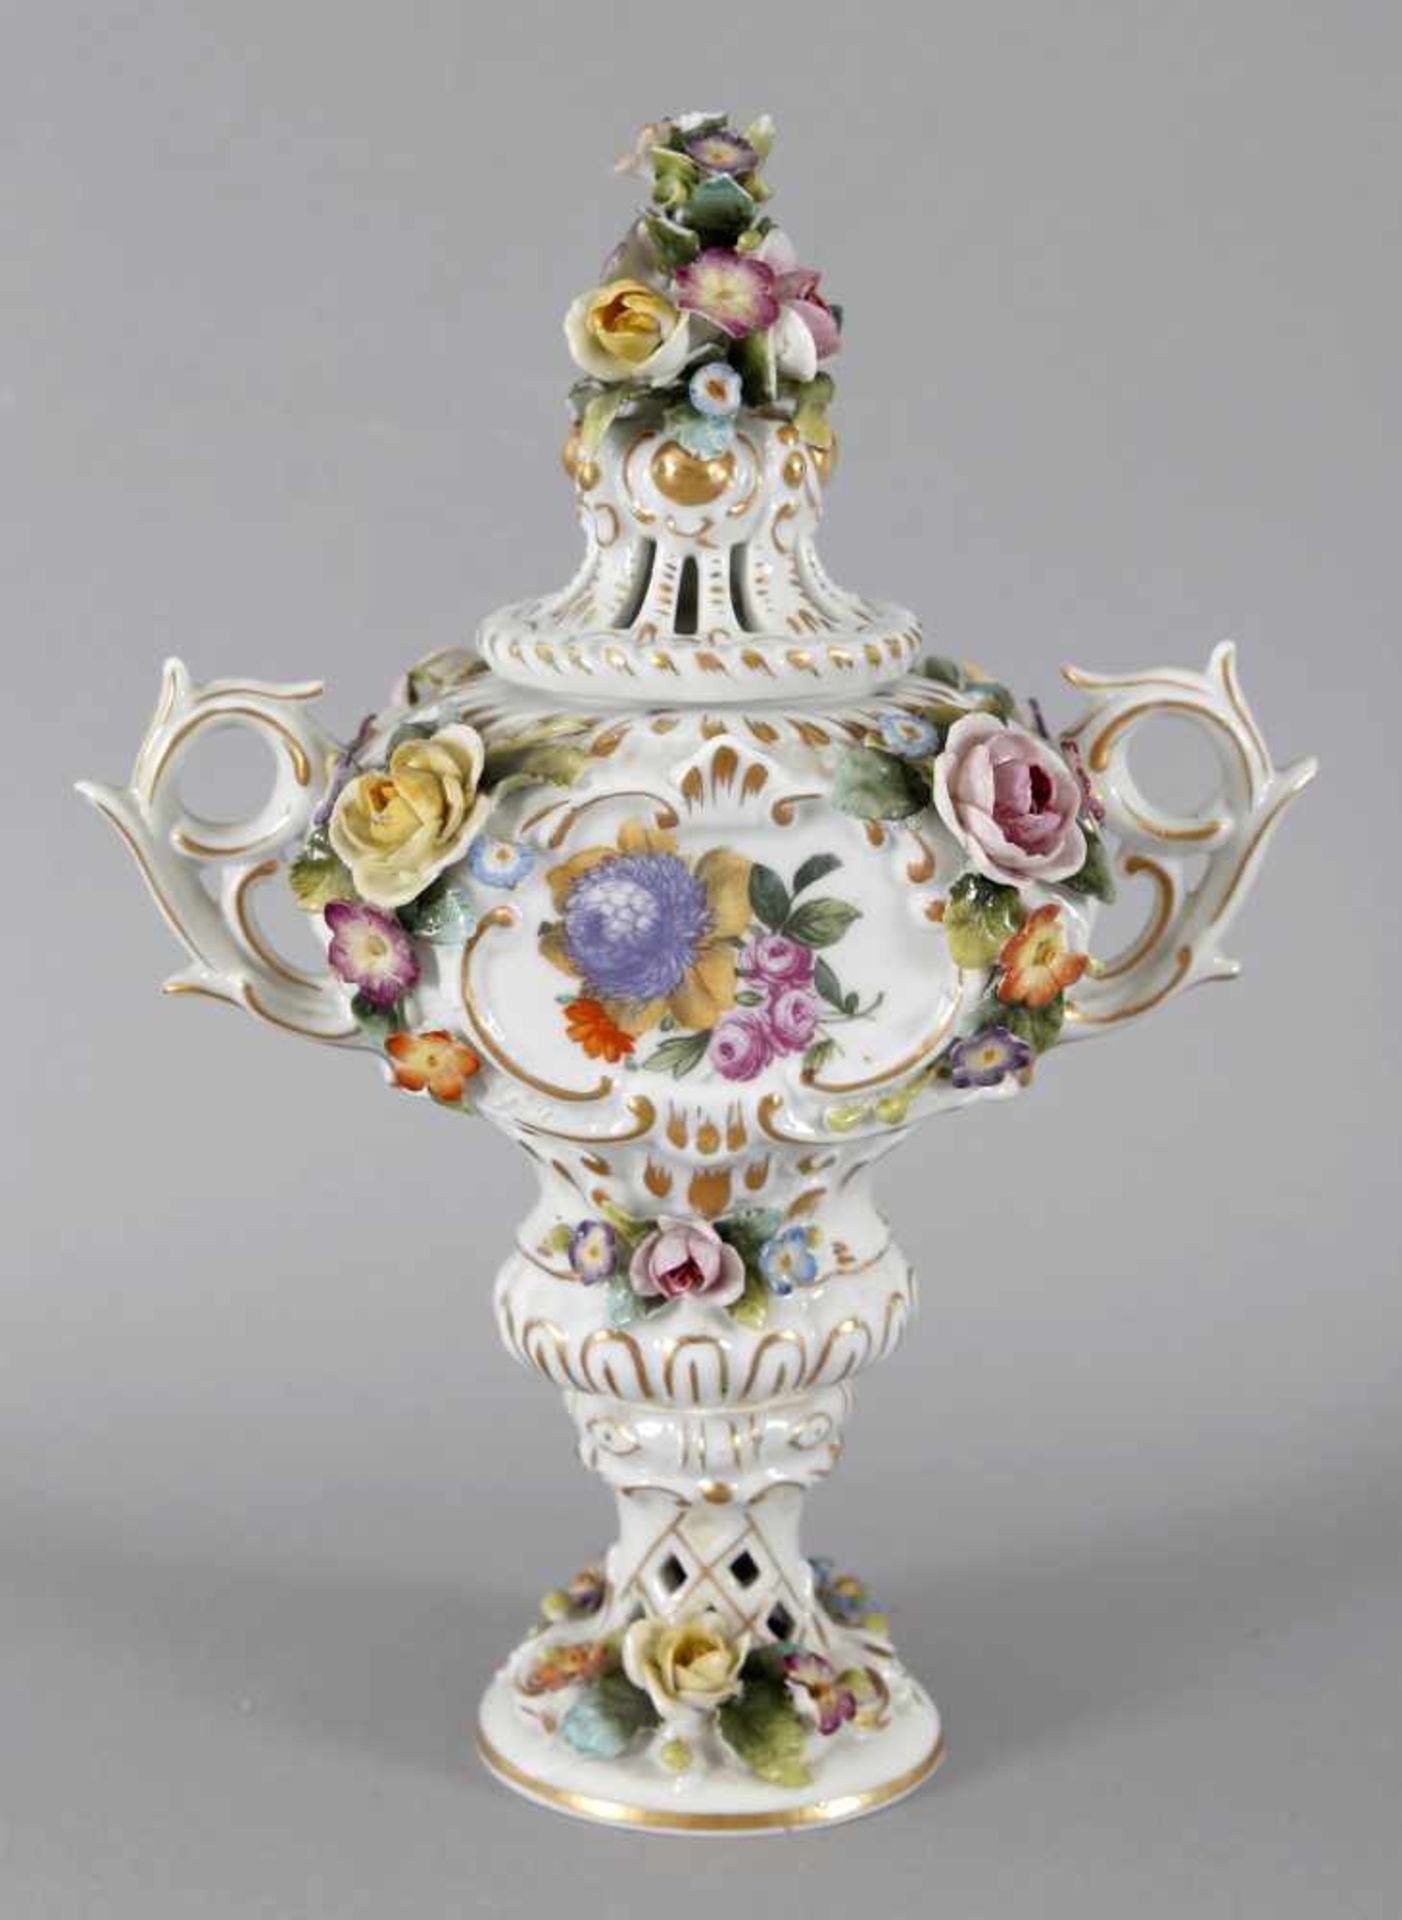 Potpourri-Vase mit Deckel im Stil des 18. Jh., Volkstedt, Thüringen, Anfang 20. Jh.